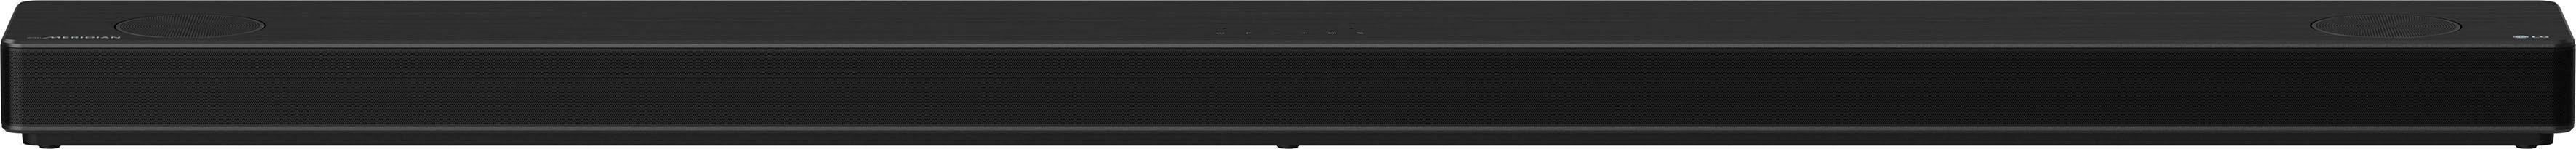 LG DSP11RA 7.1.4 Soundbar 770 WLAN, W) (Bluetooth